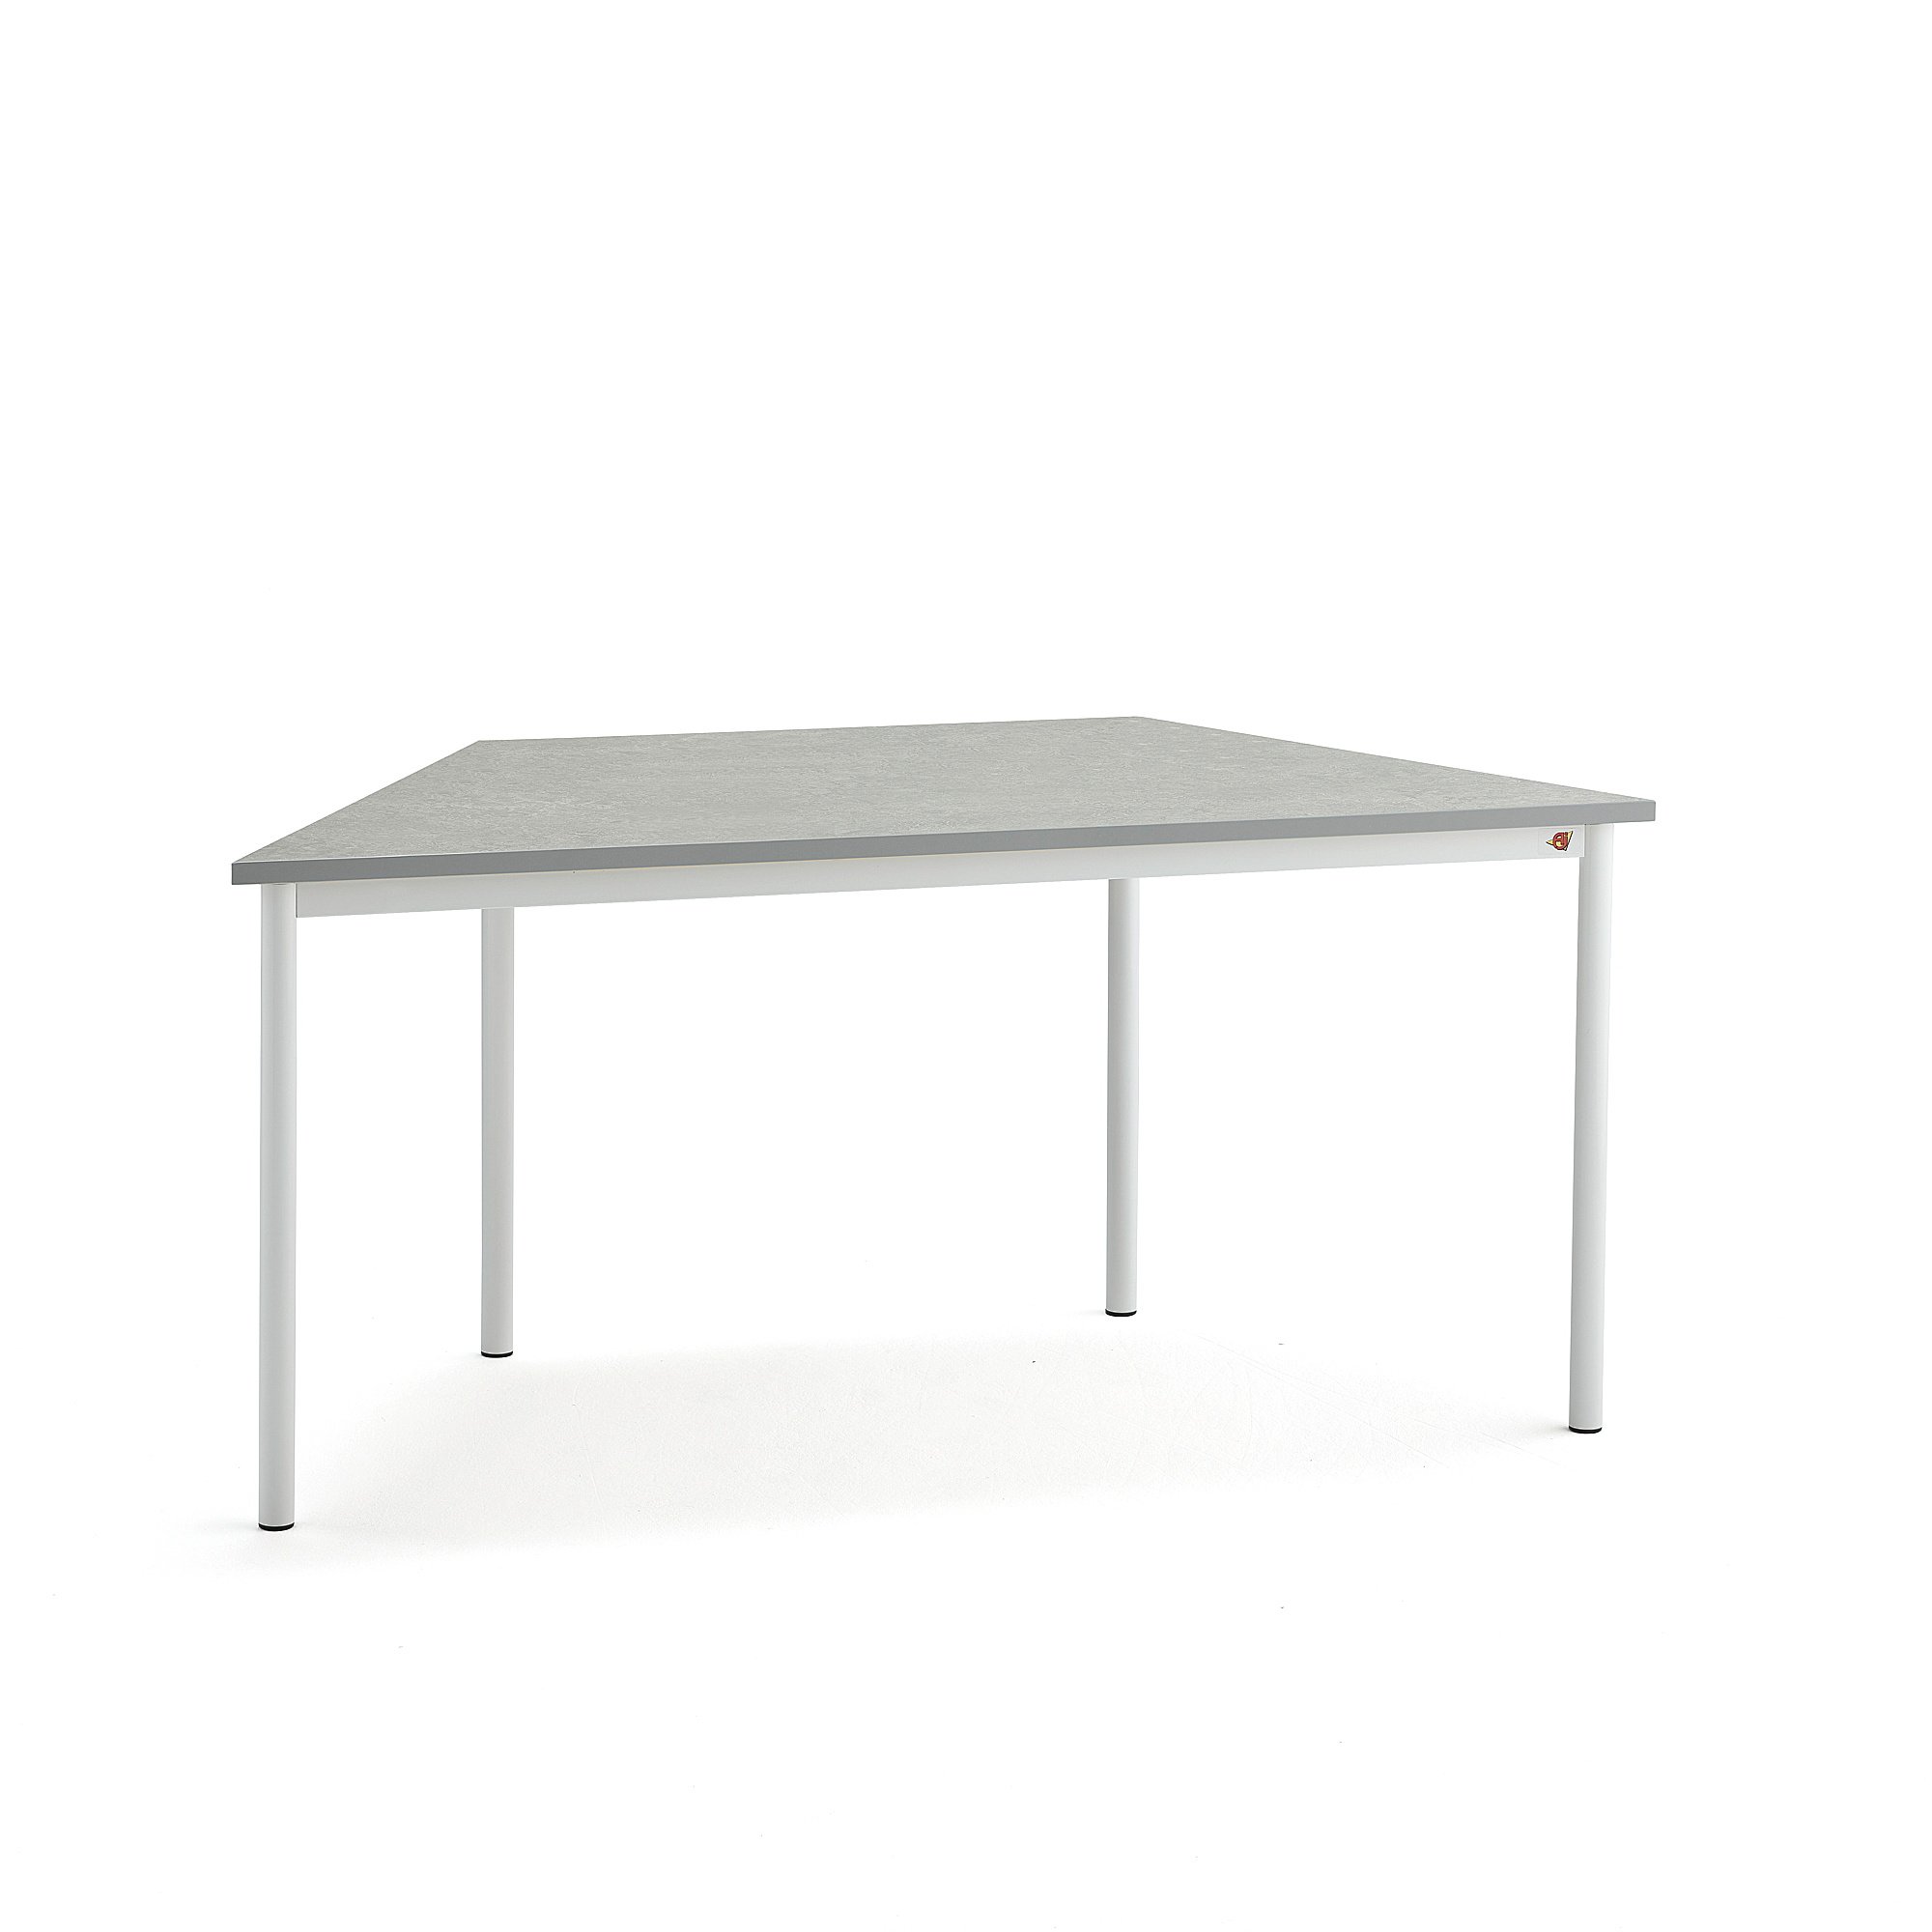 Stůl SONITUS TRAPETS, 1600x800x720 mm, bílé nohy, deska s linoleem, šedá